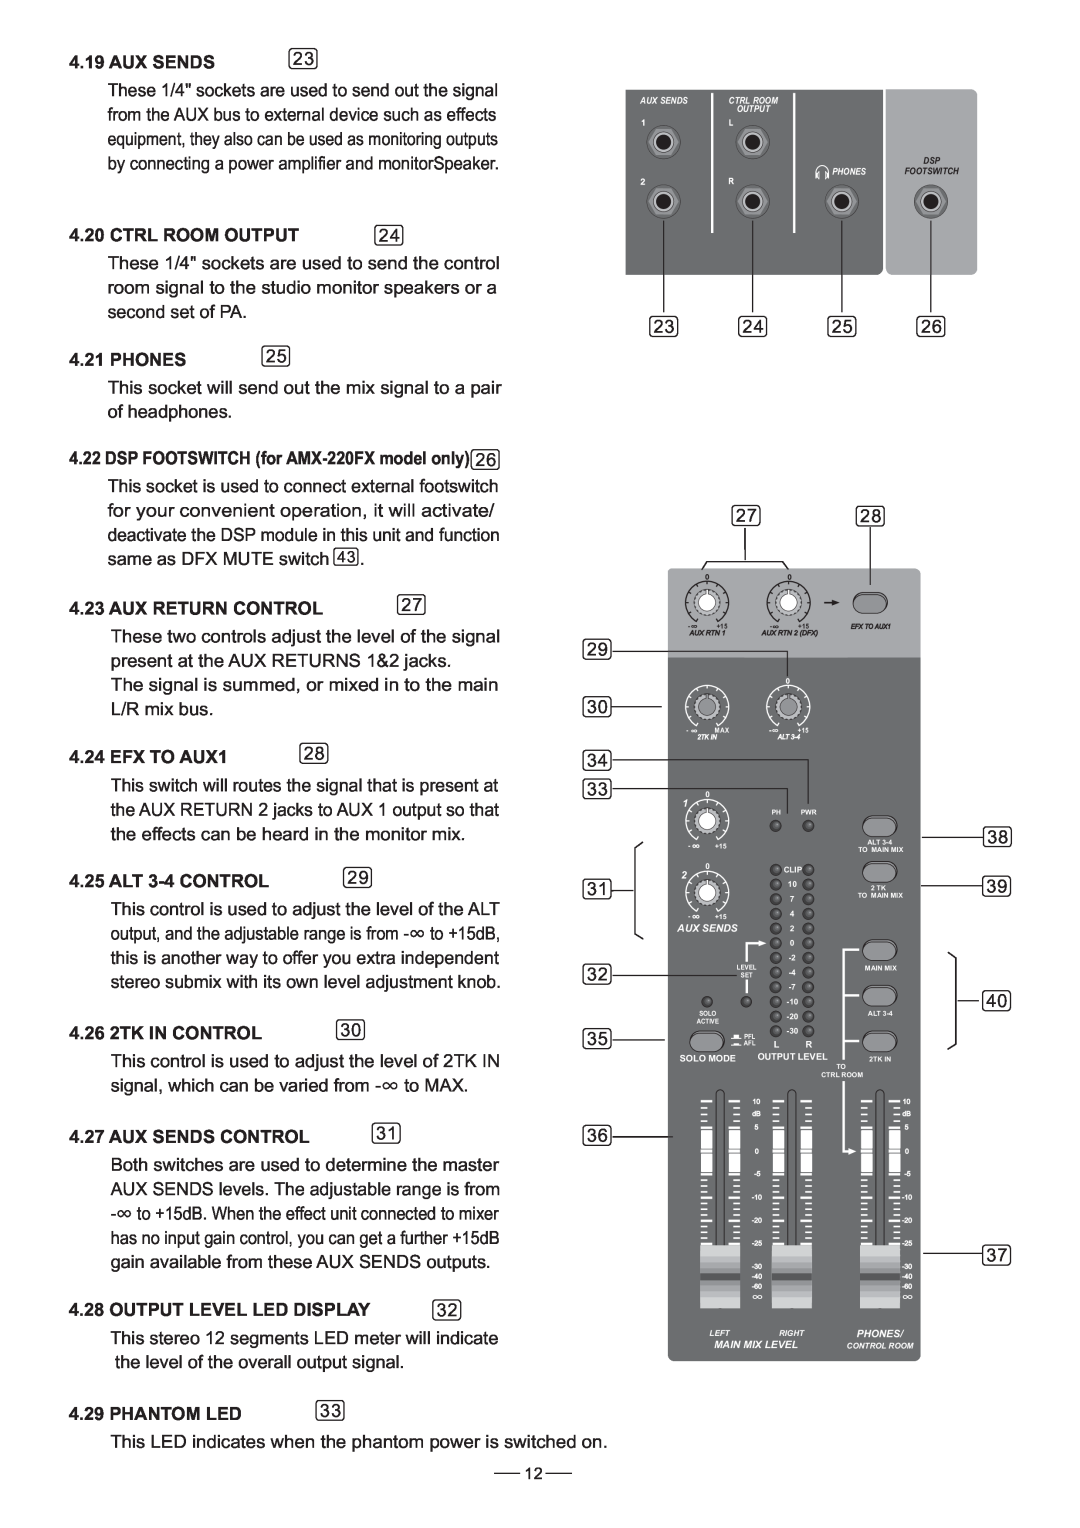 Humminbird AMX-220FX Aux Return Control, EFX TO AUX1, ALT 3-4 CONTROL, 4.26 2TK IN CONTROL, Aux Sends Control 